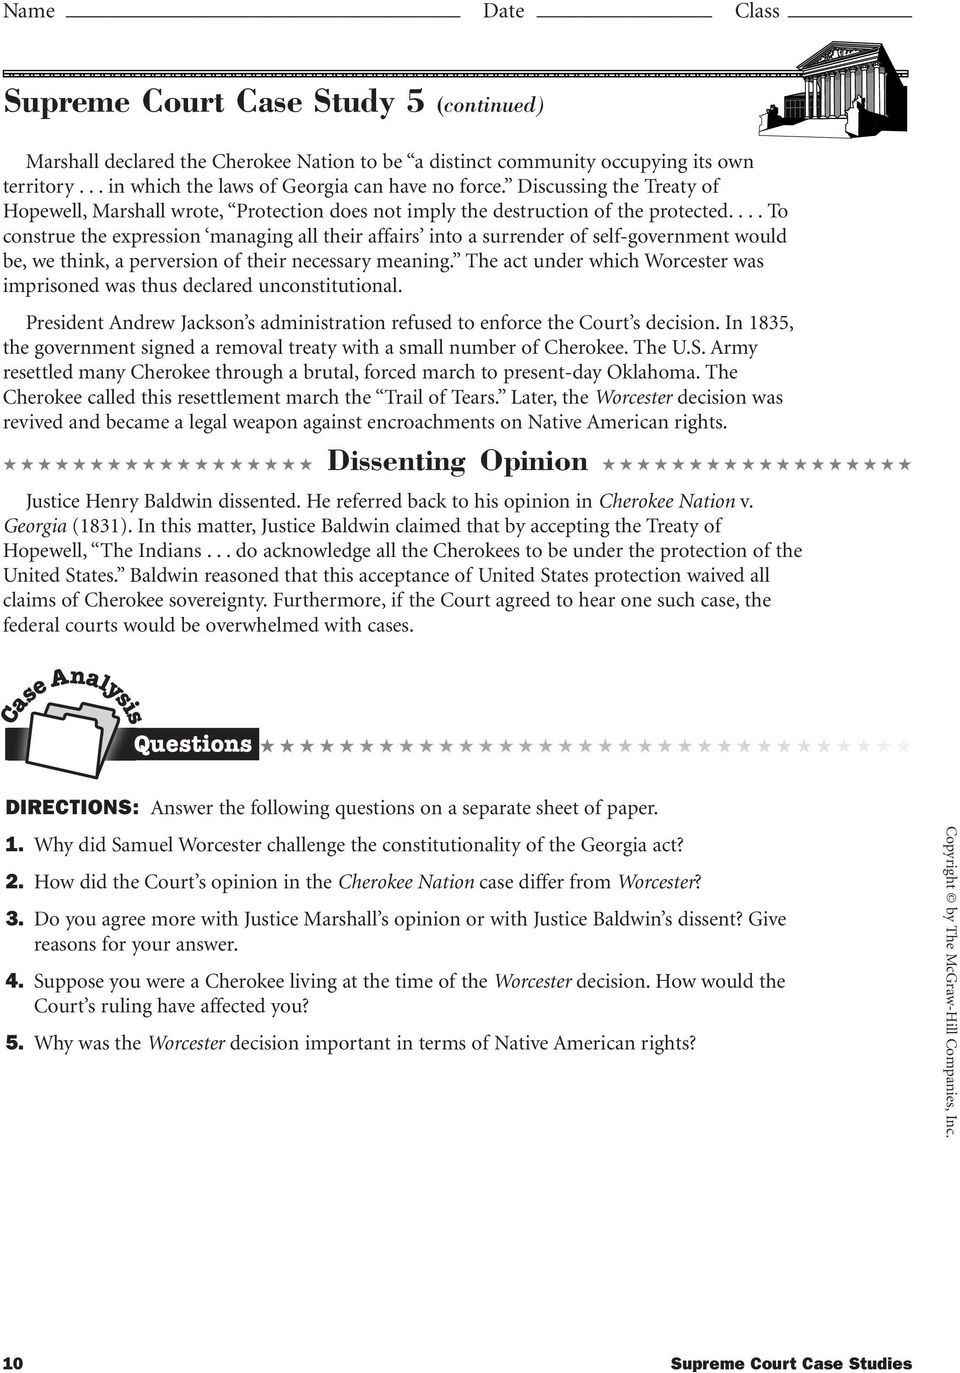 Supreme Court Case Studies  College Paper Example